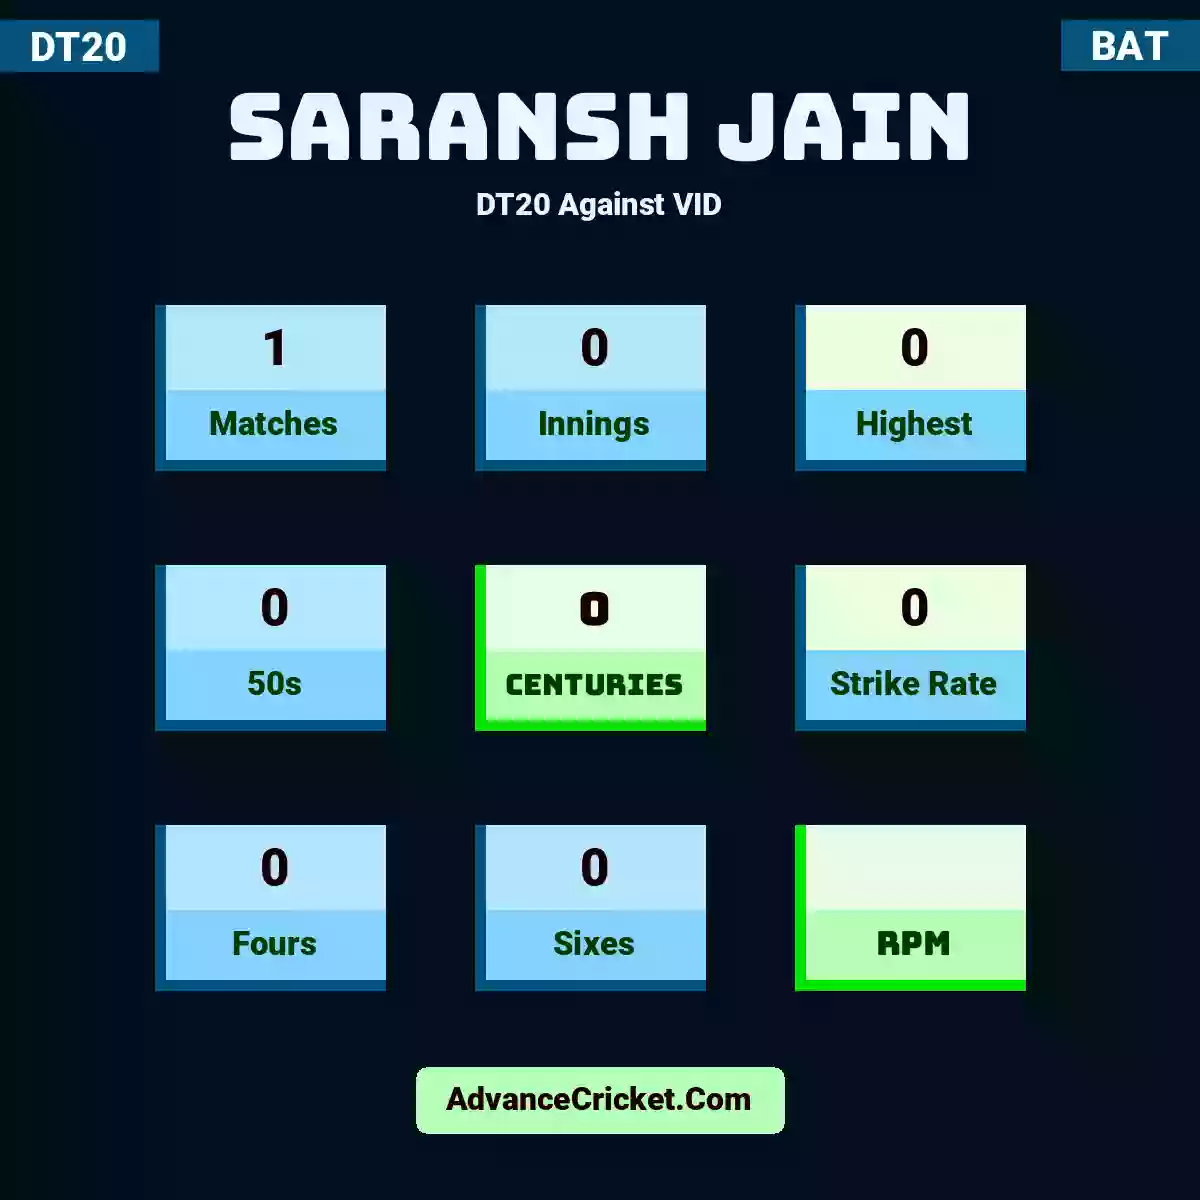 Saransh Jain DT20  Against VID, Saransh Jain played 1 matches, scored 0 runs as highest, 0 half-centuries, and 0 centuries, with a strike rate of 0. S.Jain hit 0 fours and 0 sixes.